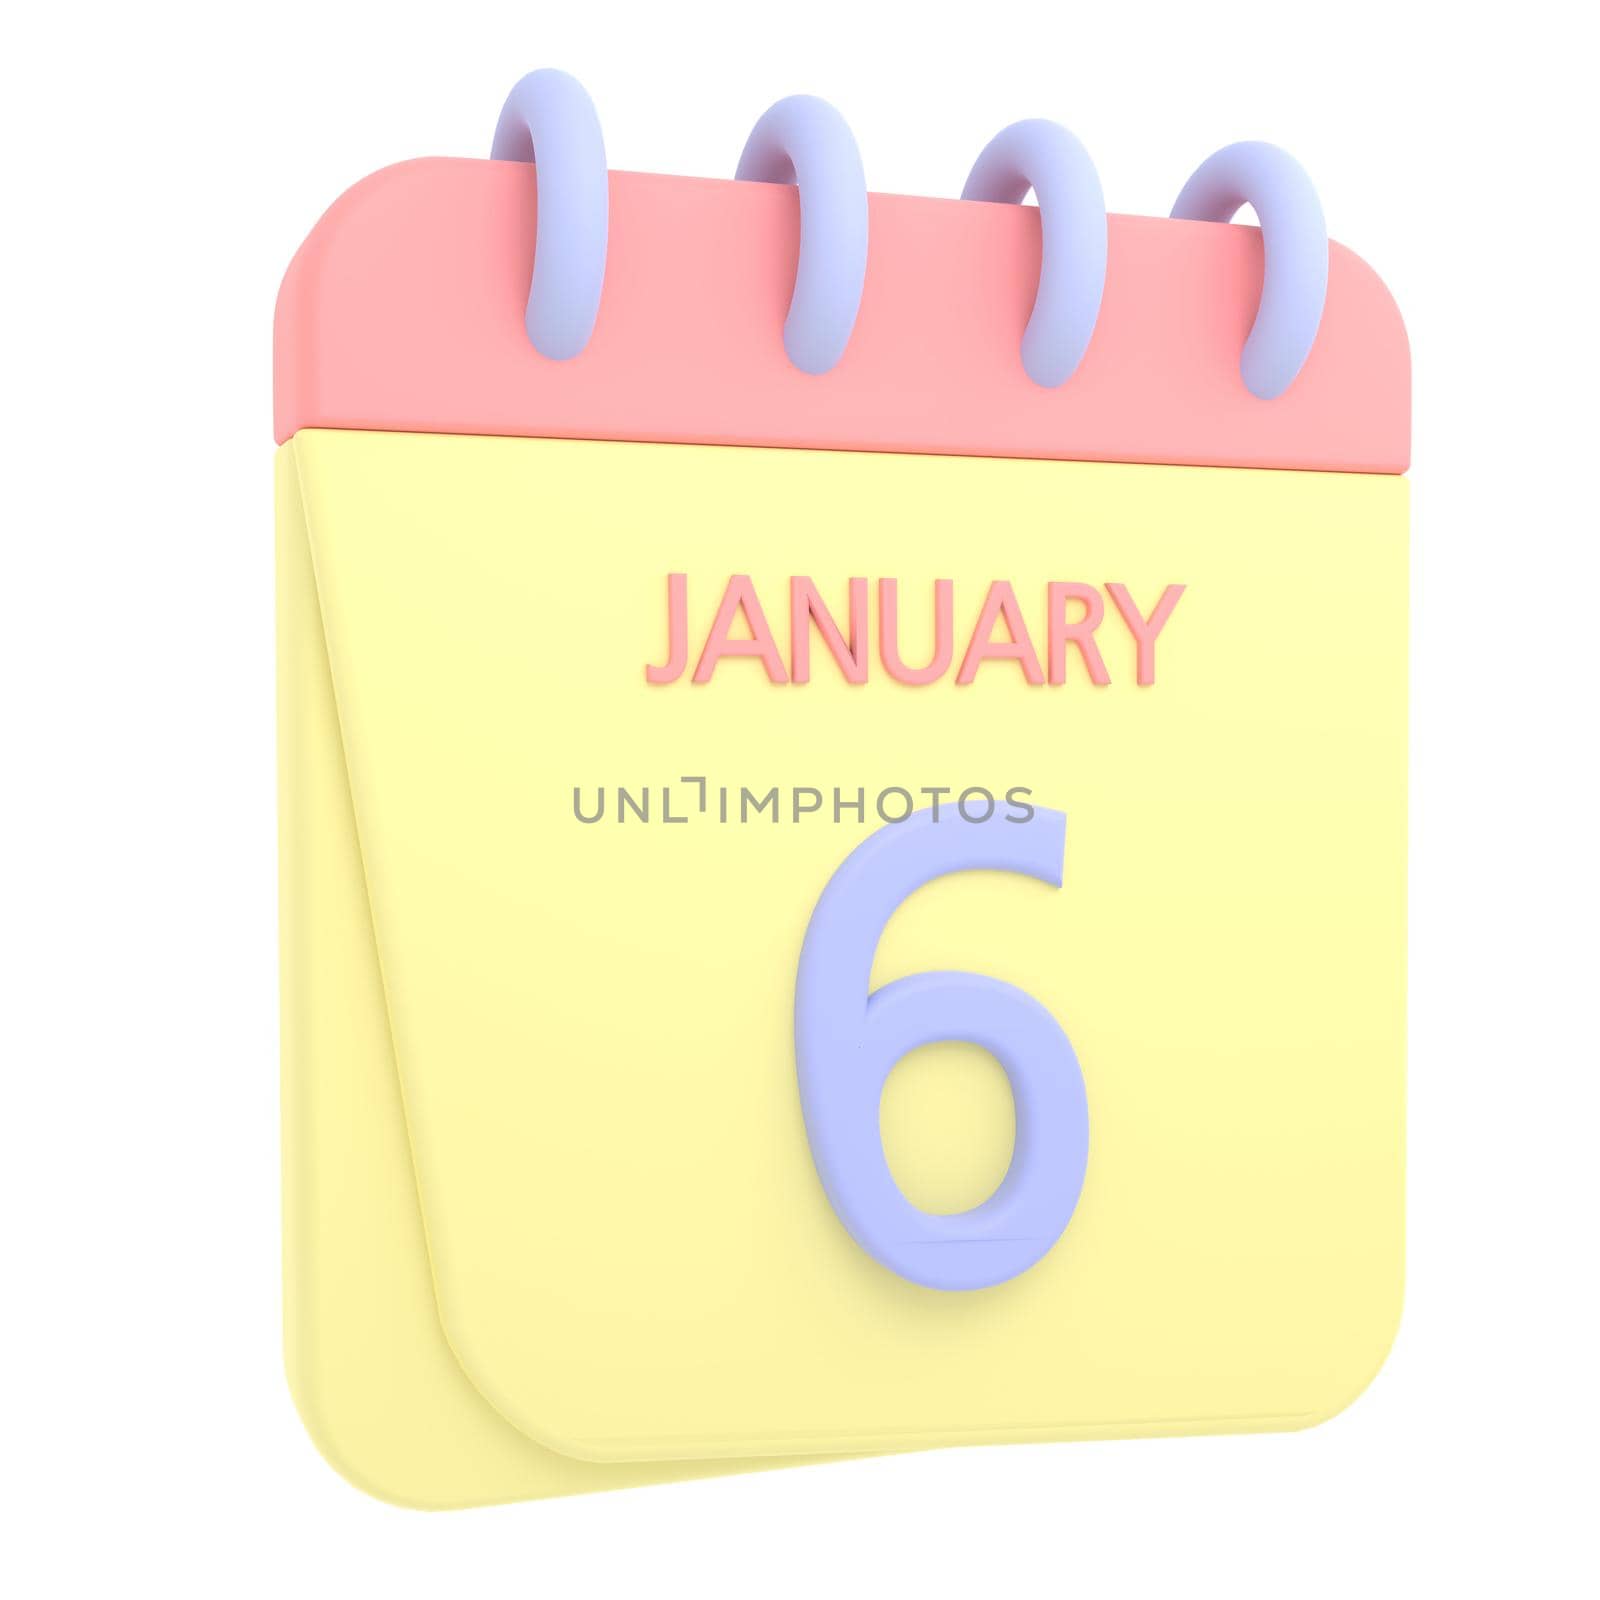 6th January 3D calendar icon by AnnaMarin